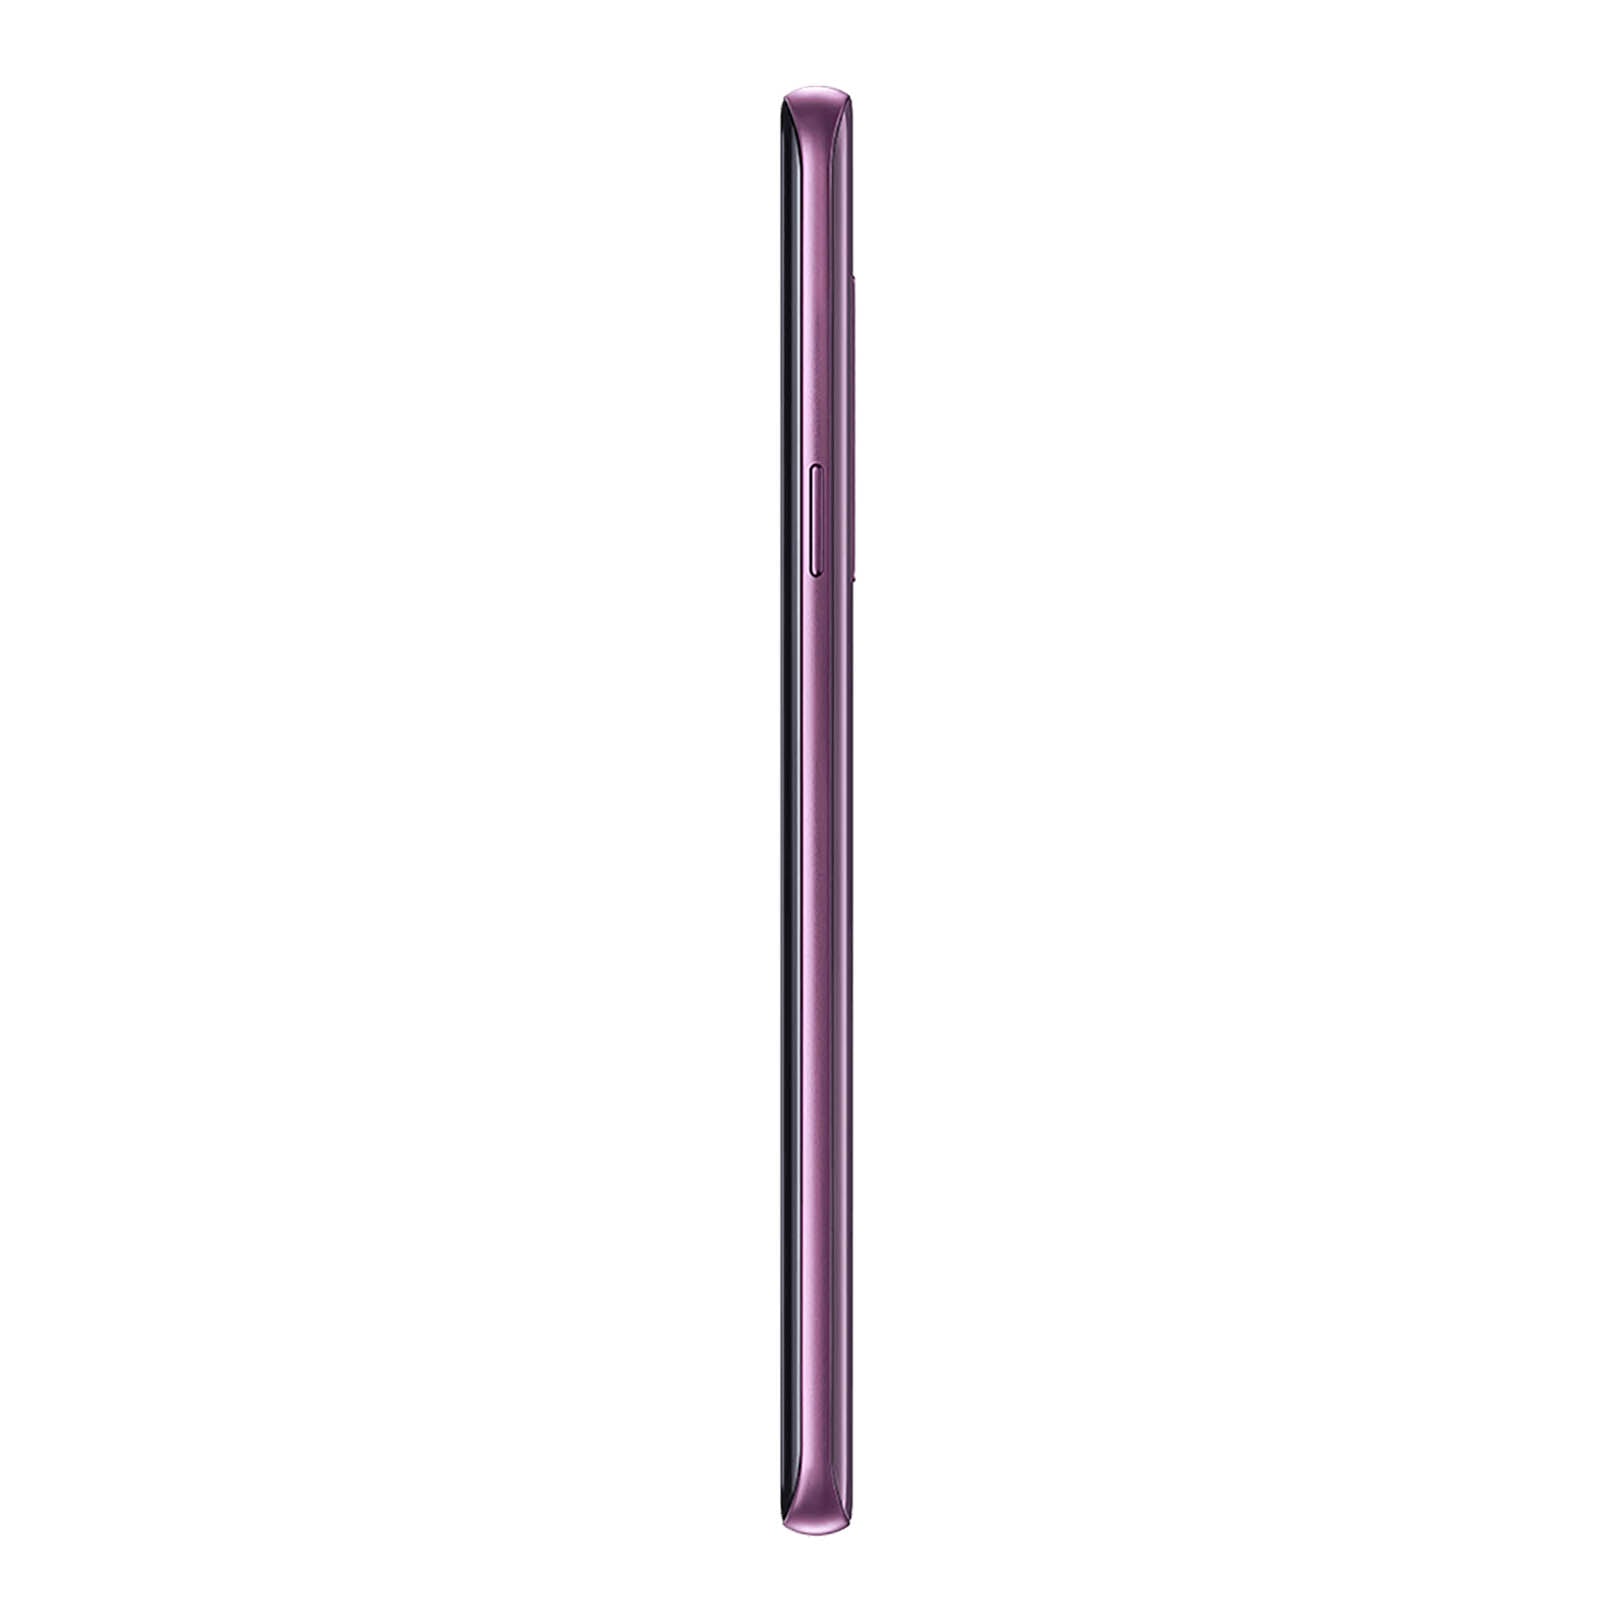 Samsung Galaxy S9 Plus 256GB Purple Very good - Unlocked